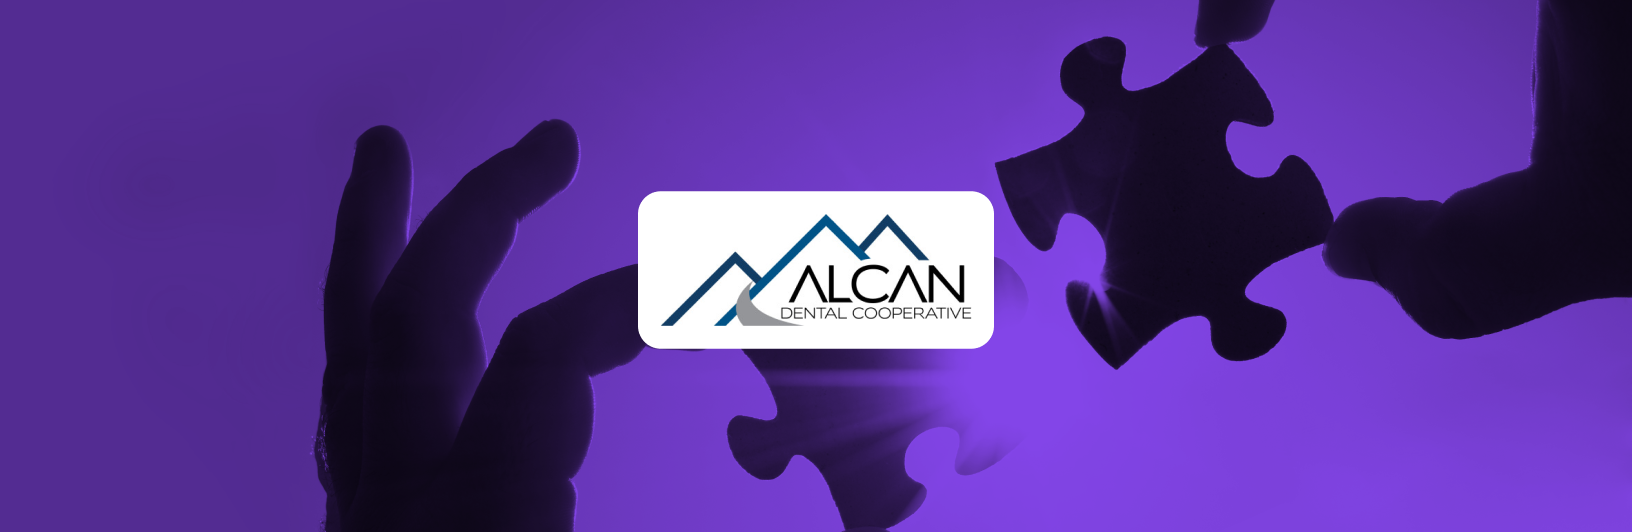 carestack announces strategic partnership with alcan dental cooperative